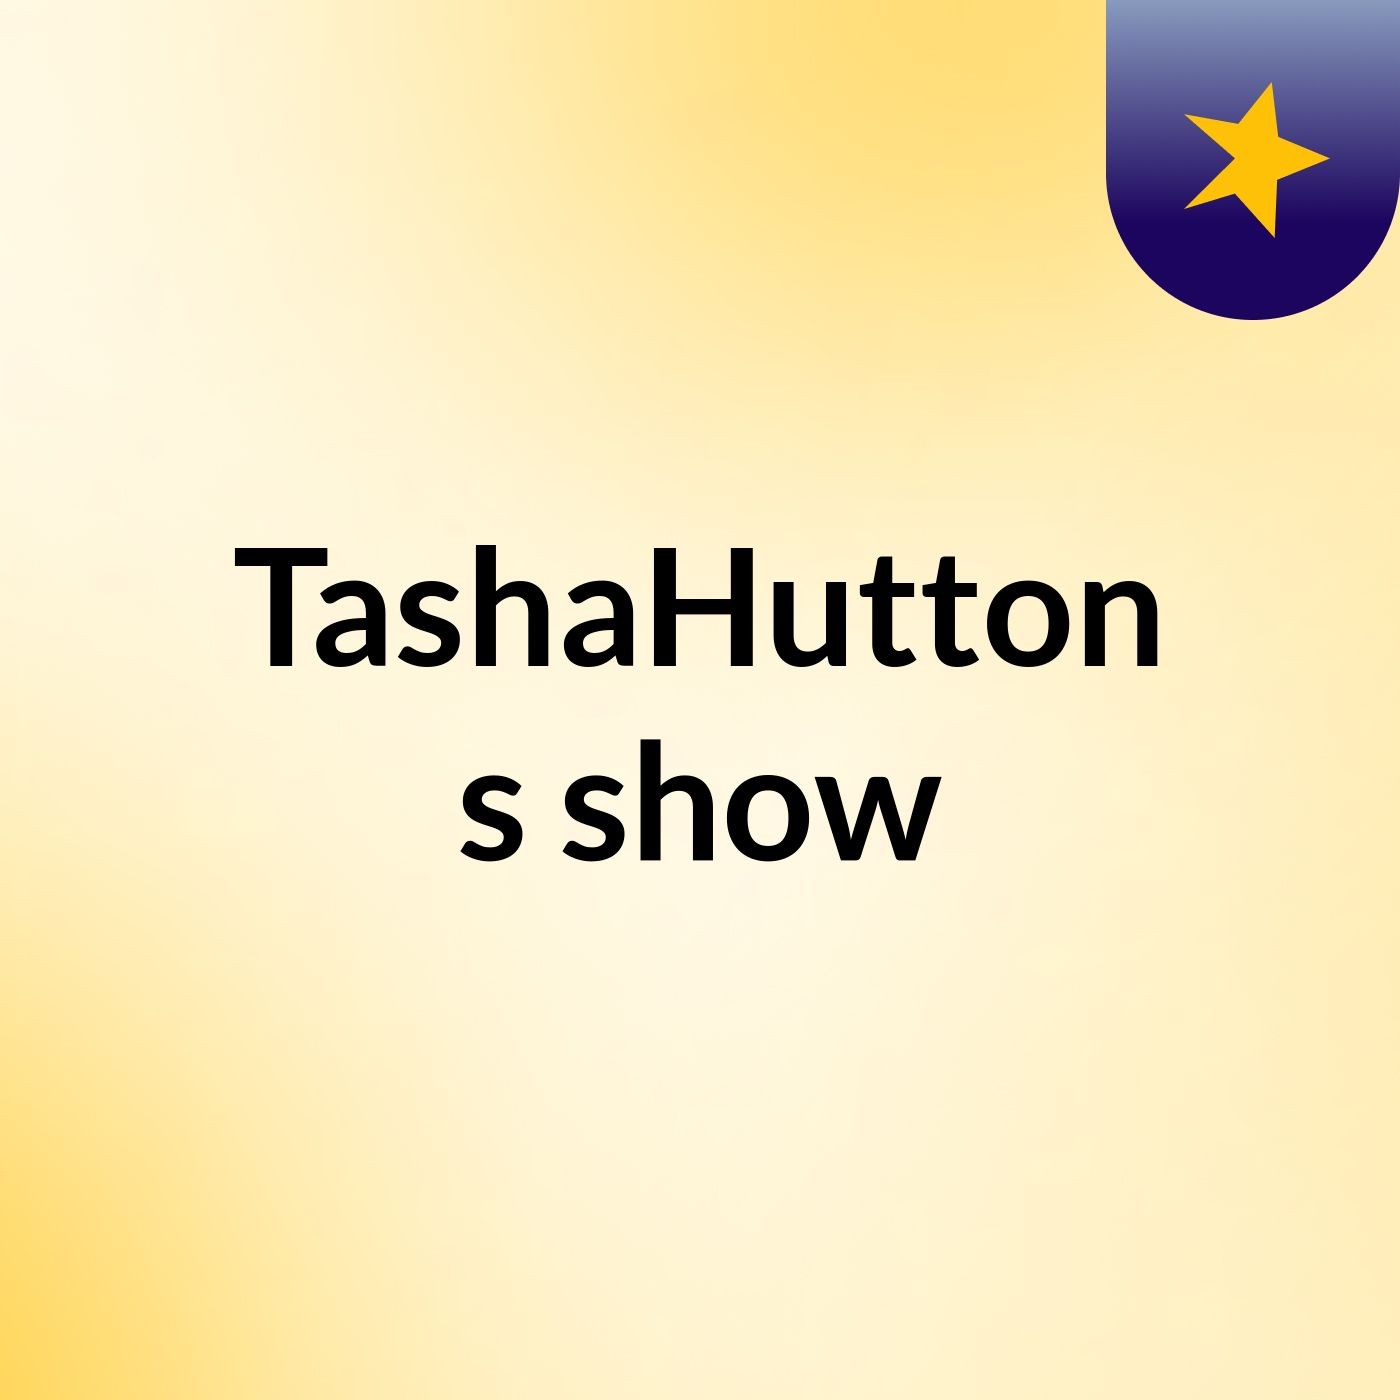 TashaHutton's show